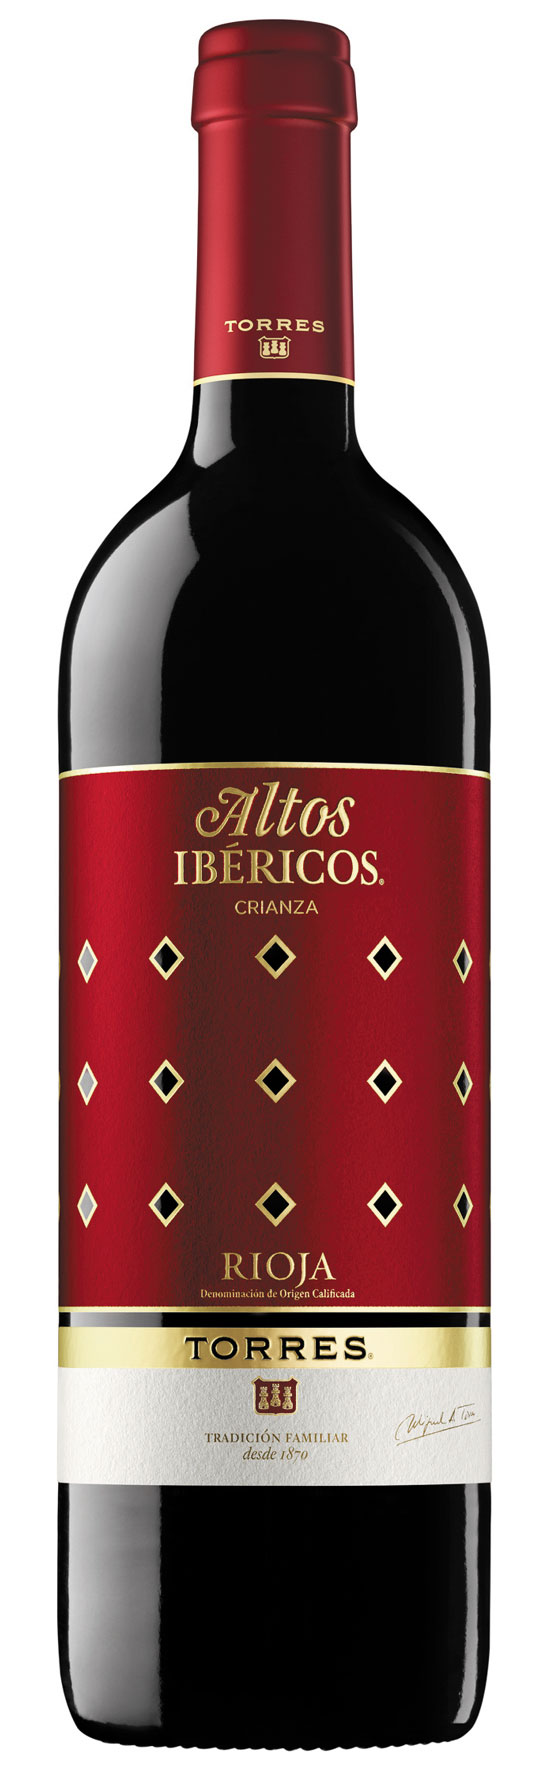 Spanischer Rotwein Torres Altos Ibericos Crianza Rioja 2019 | Vinum Nobile